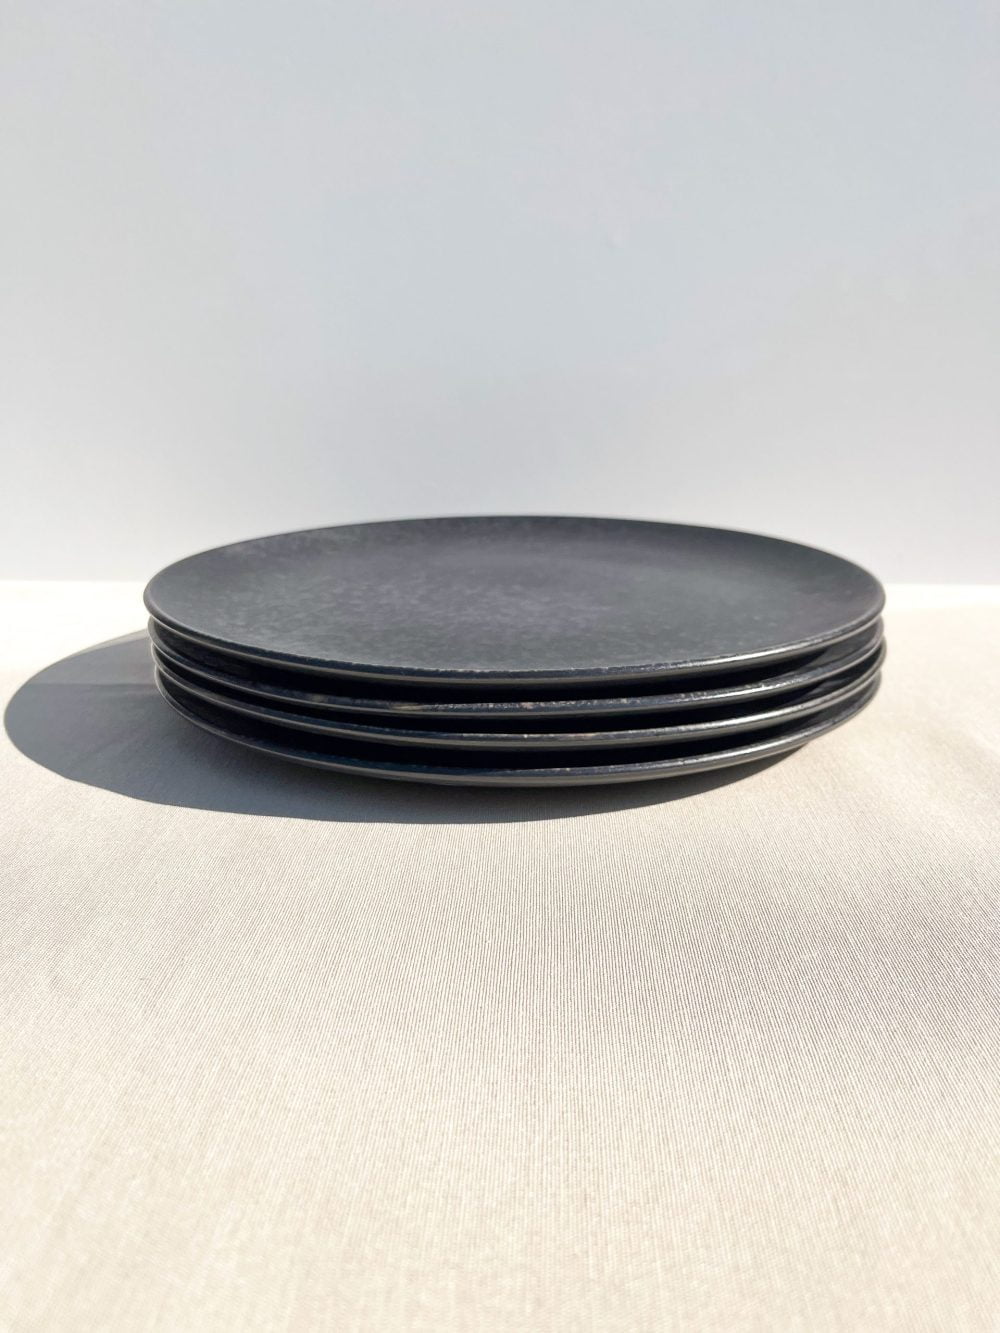 zwarte diner borden - black stone -handgemaakt keramiek - modern portugees servies bij UNRO